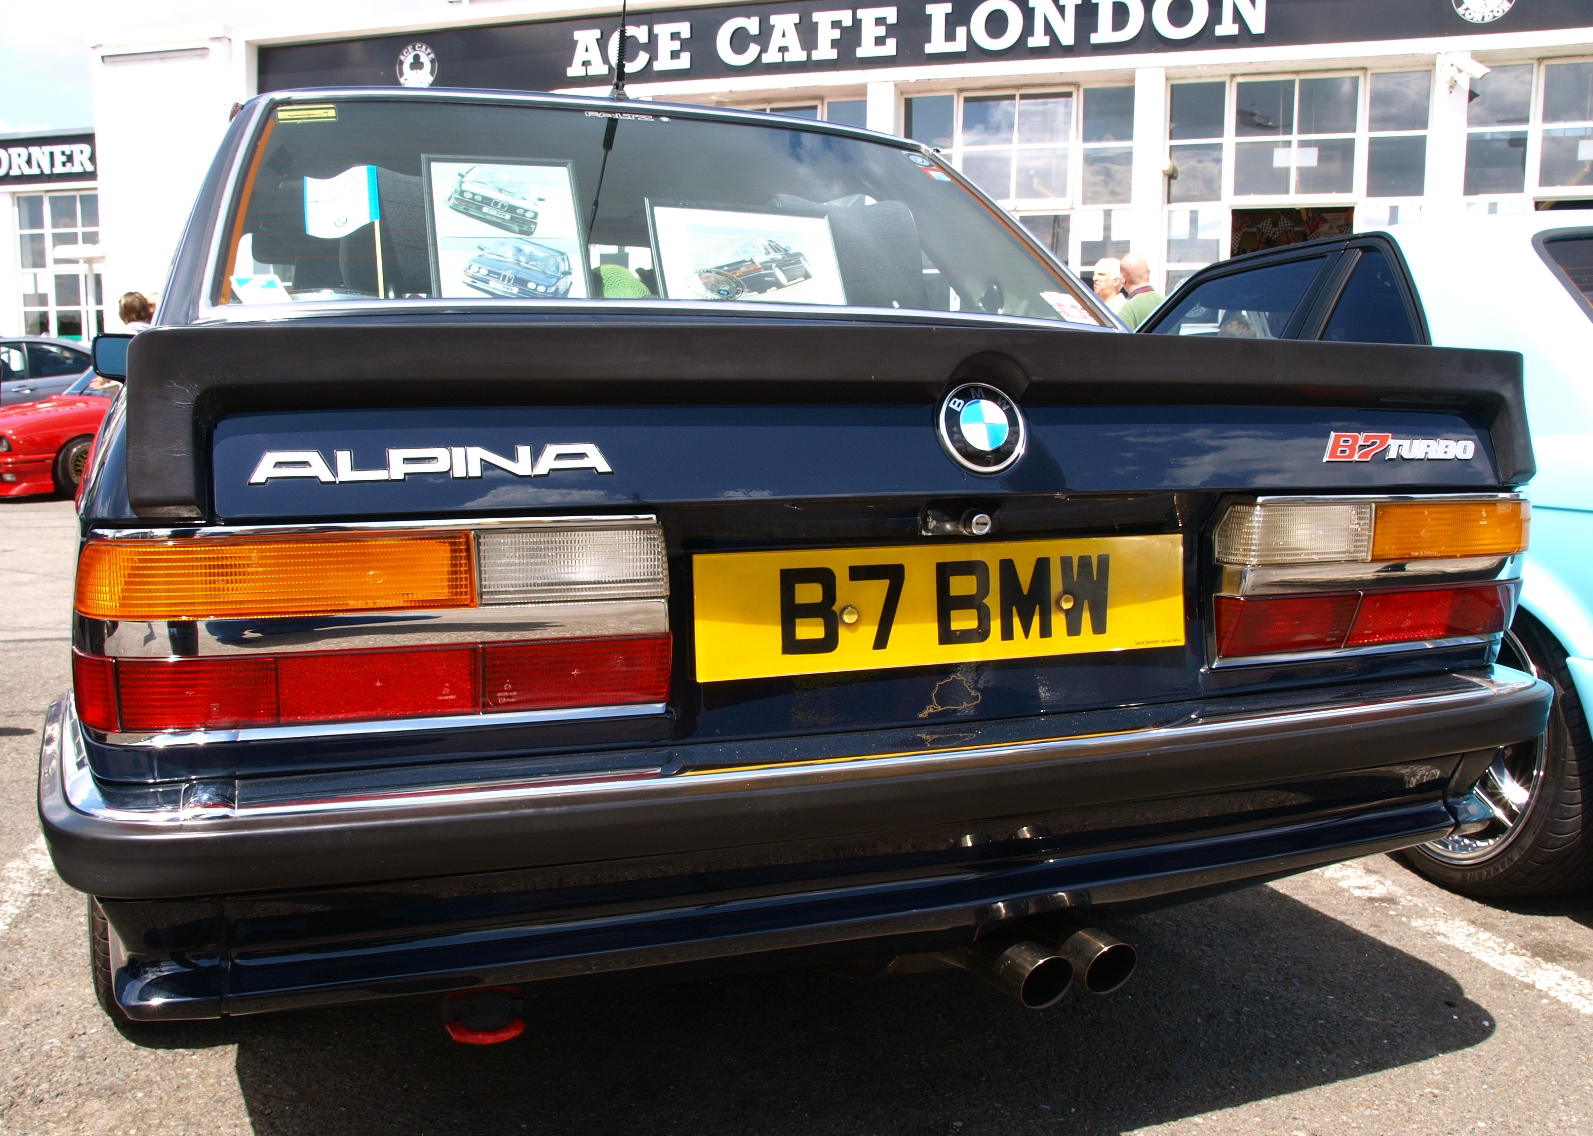 Dossier: 1984 Alpina B7 Turbo.jpg - Wikimedia Commons